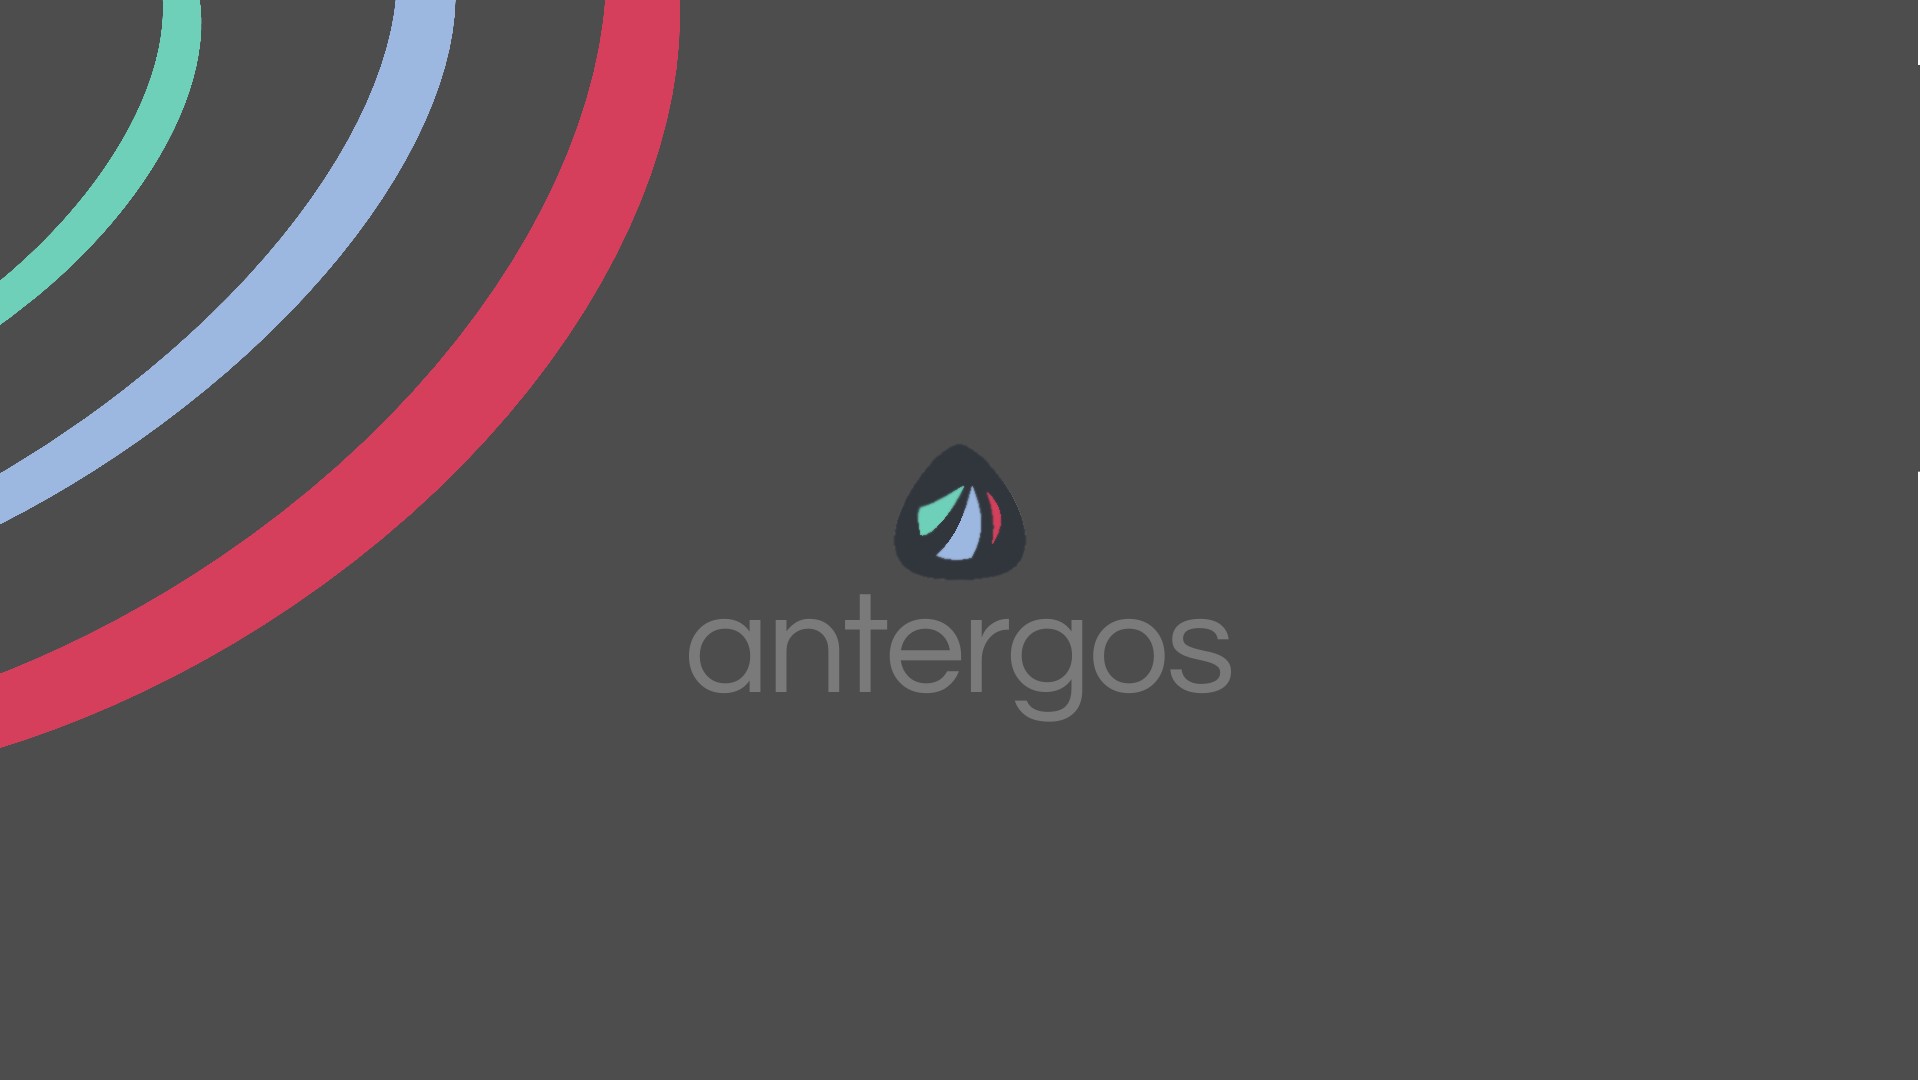 Antergos, Linux, Arch Linux, GNU Wallpaper